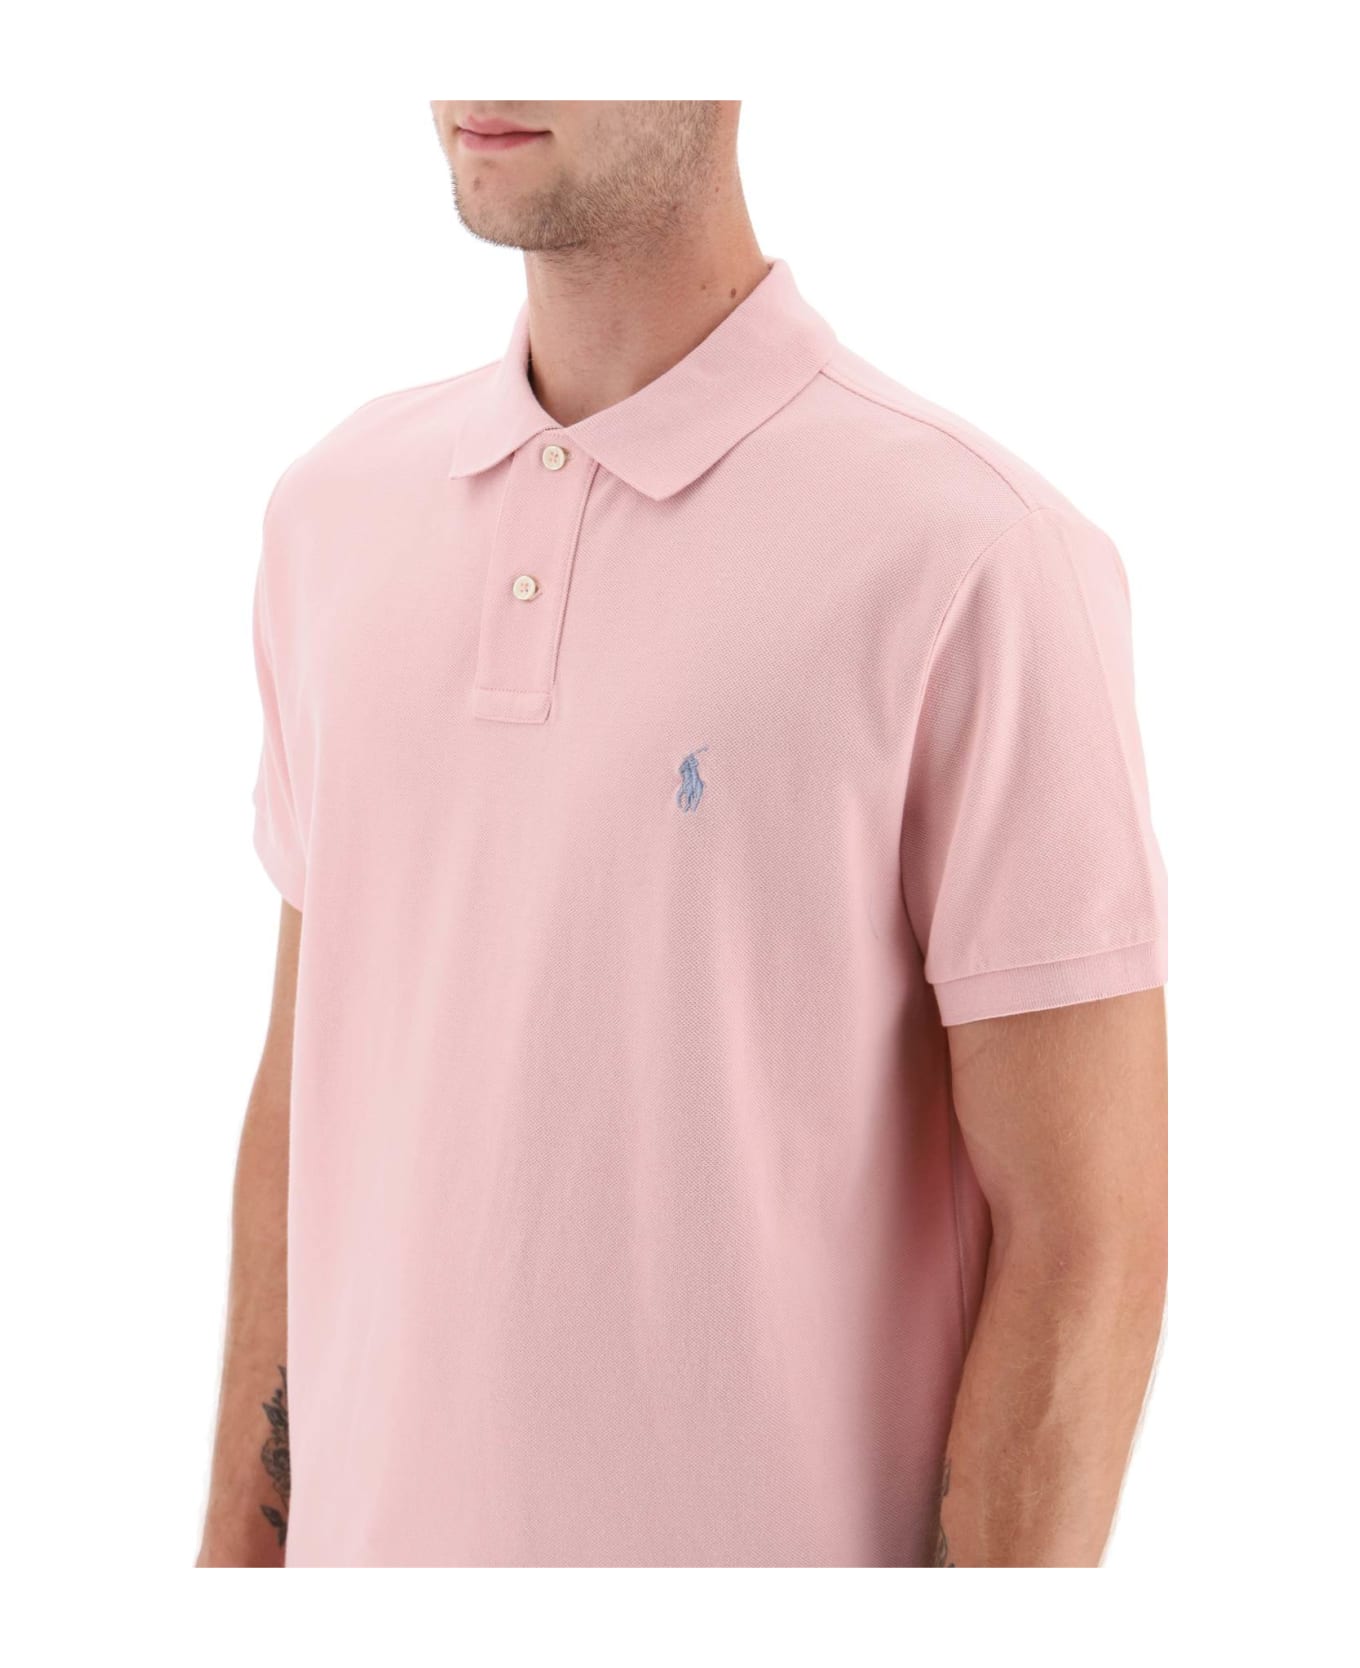 Polo Ralph Lauren Pique Cotton Polo Shirt - CHINO PINK (Pink)